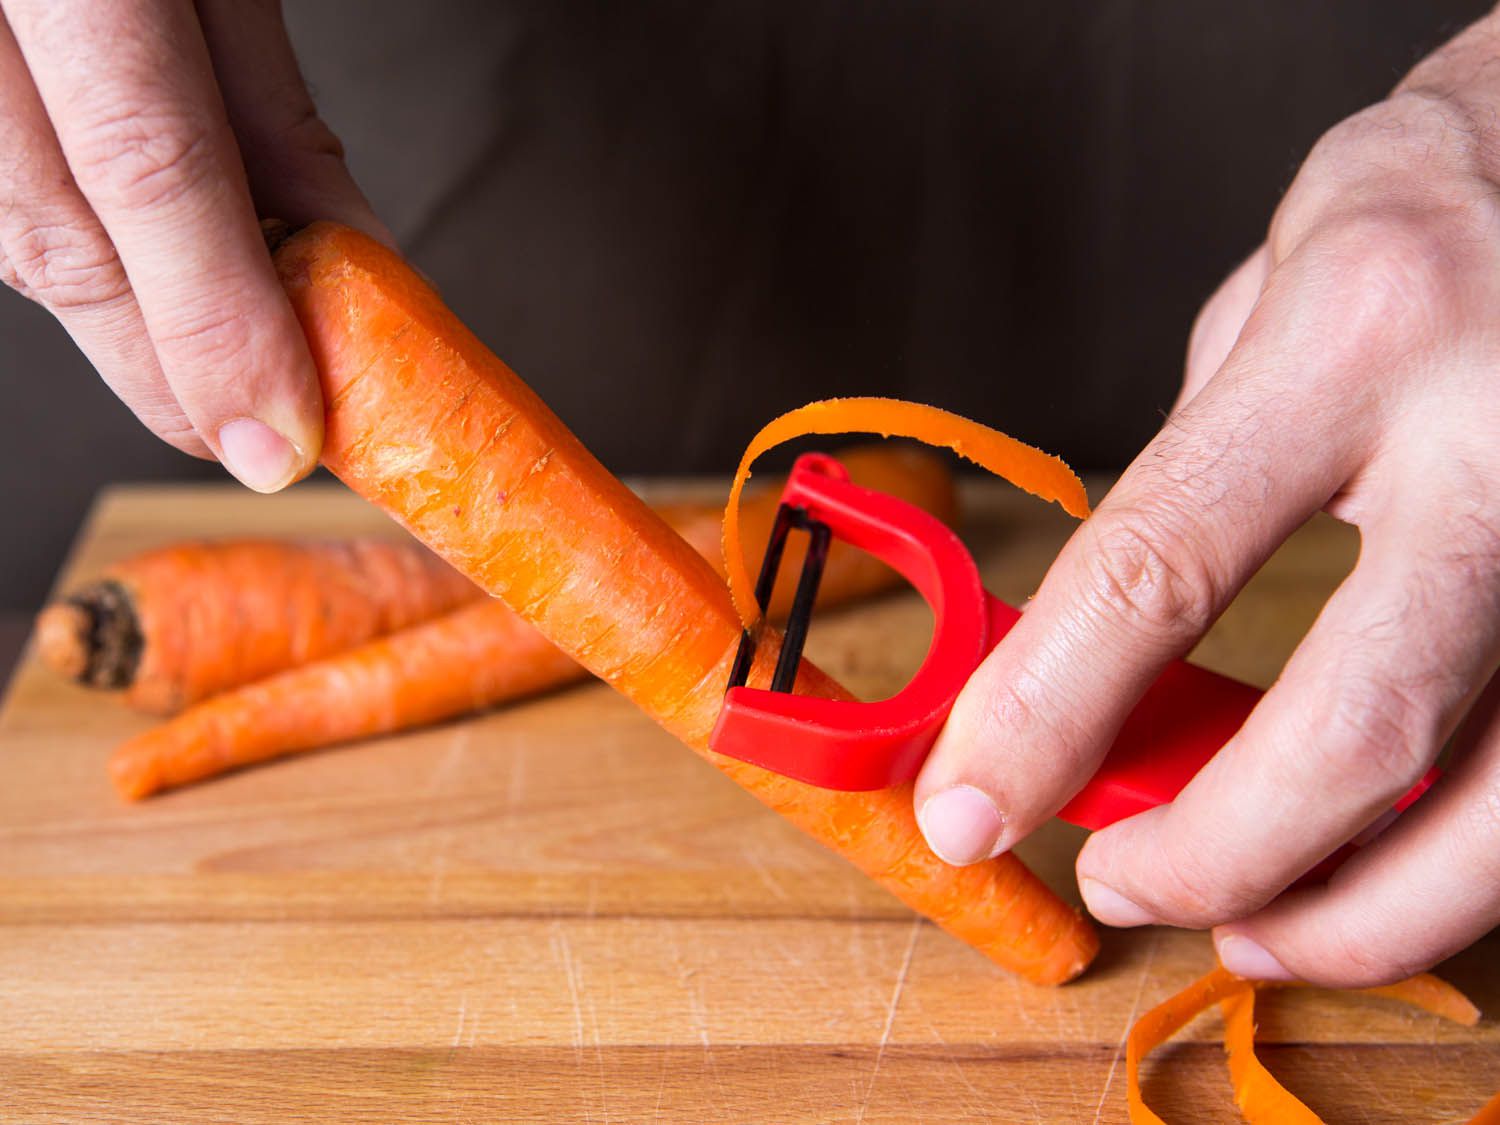 Using the Kuhn Rikon Original Swiss Peeler to peel a carrot